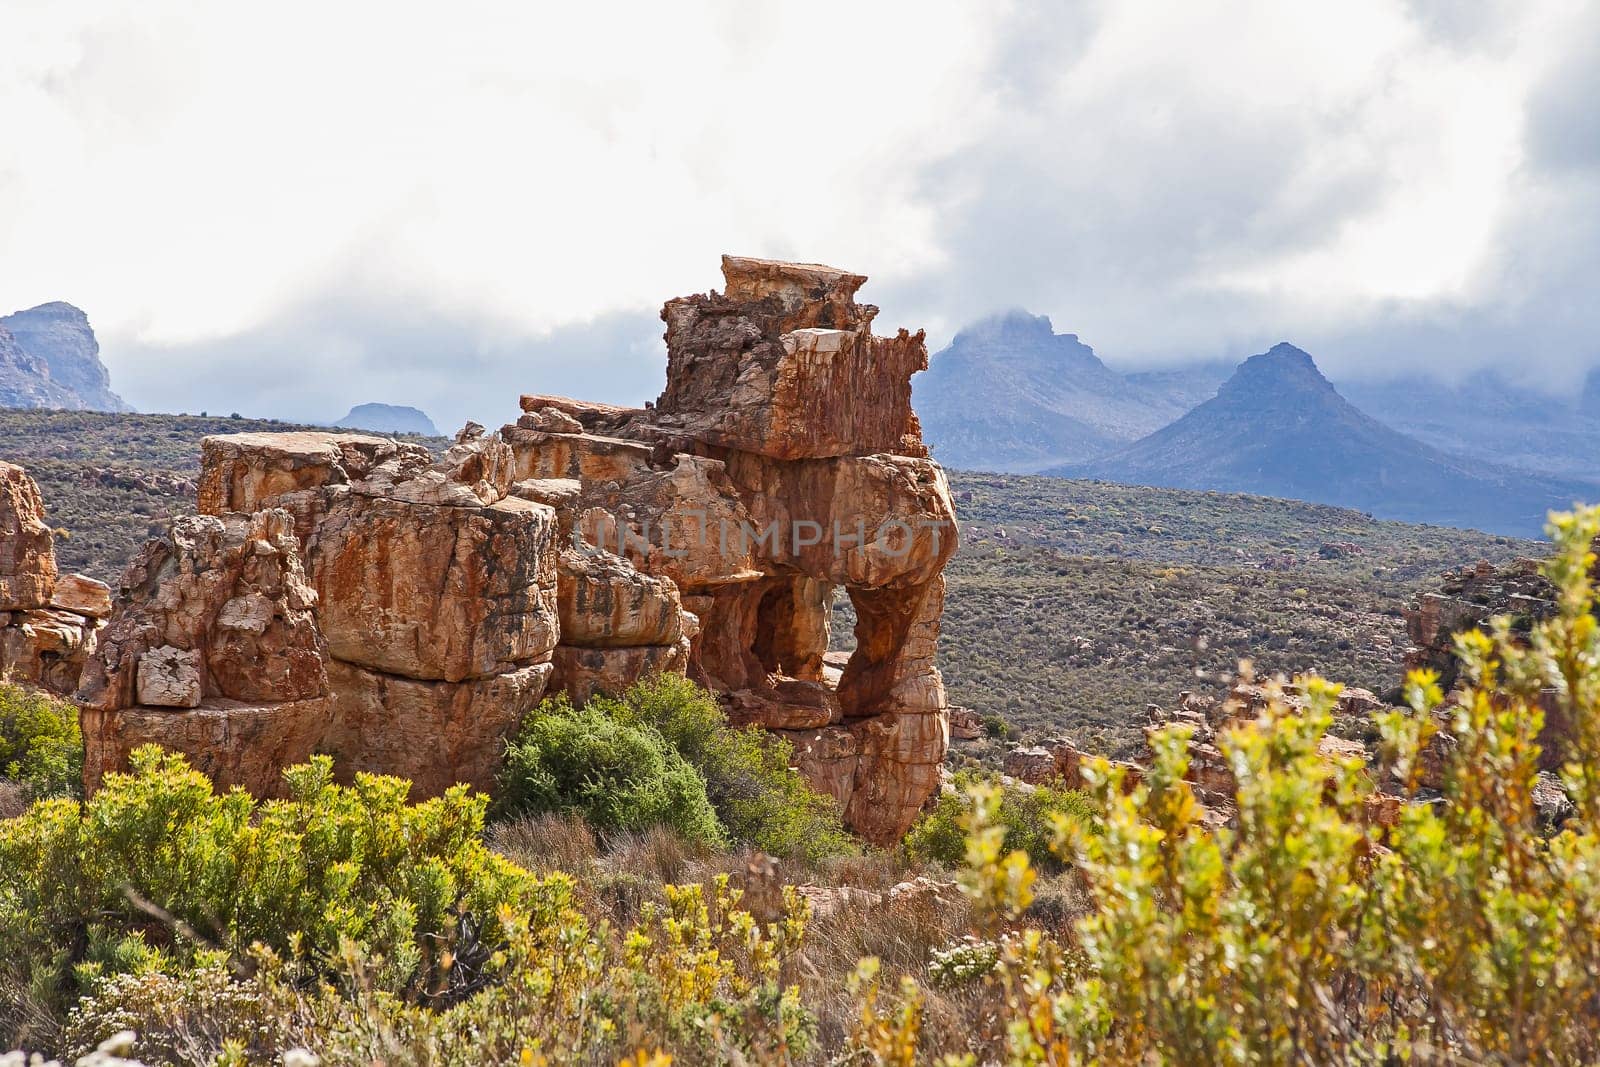 Cederberg Rocky Landscape 12986 by kobus_peche